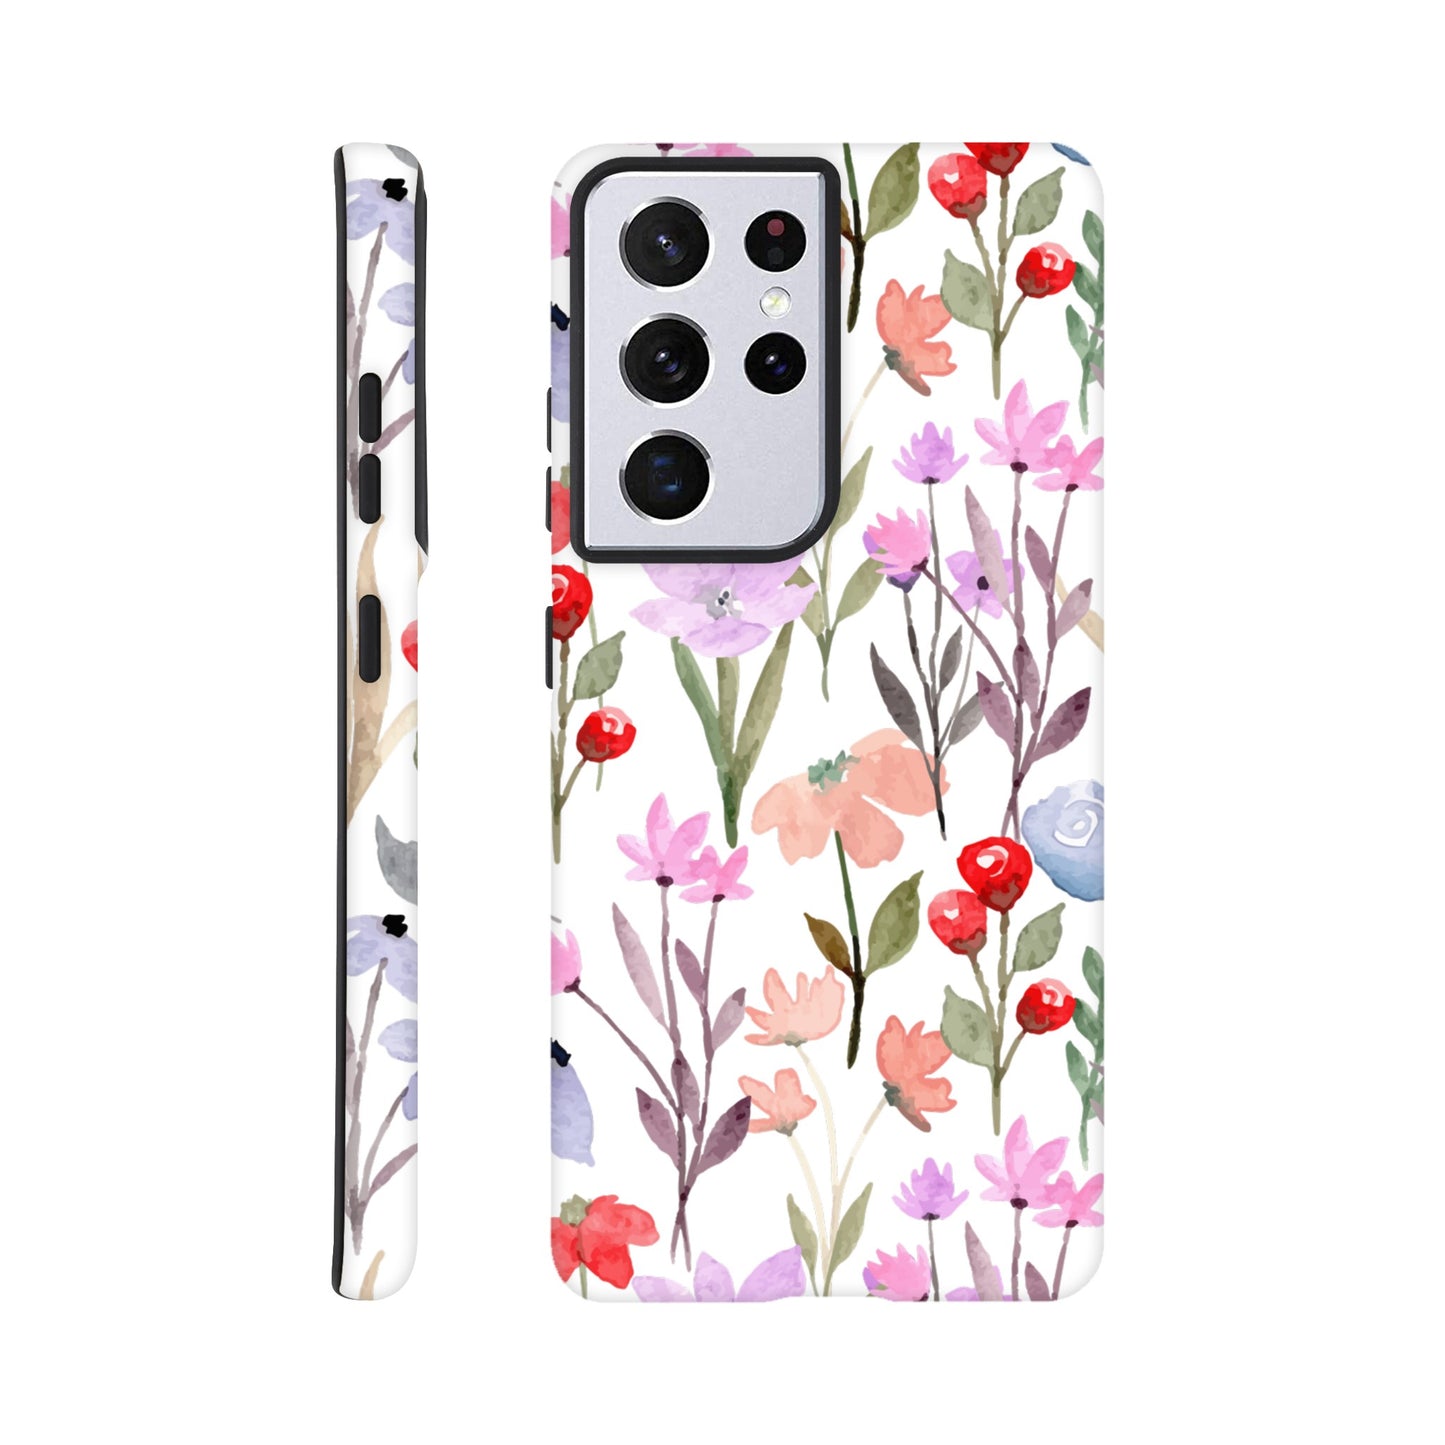 Watercolour Flowers - Phone Tough Case Galaxy S21 Ultra Phone Case Plants